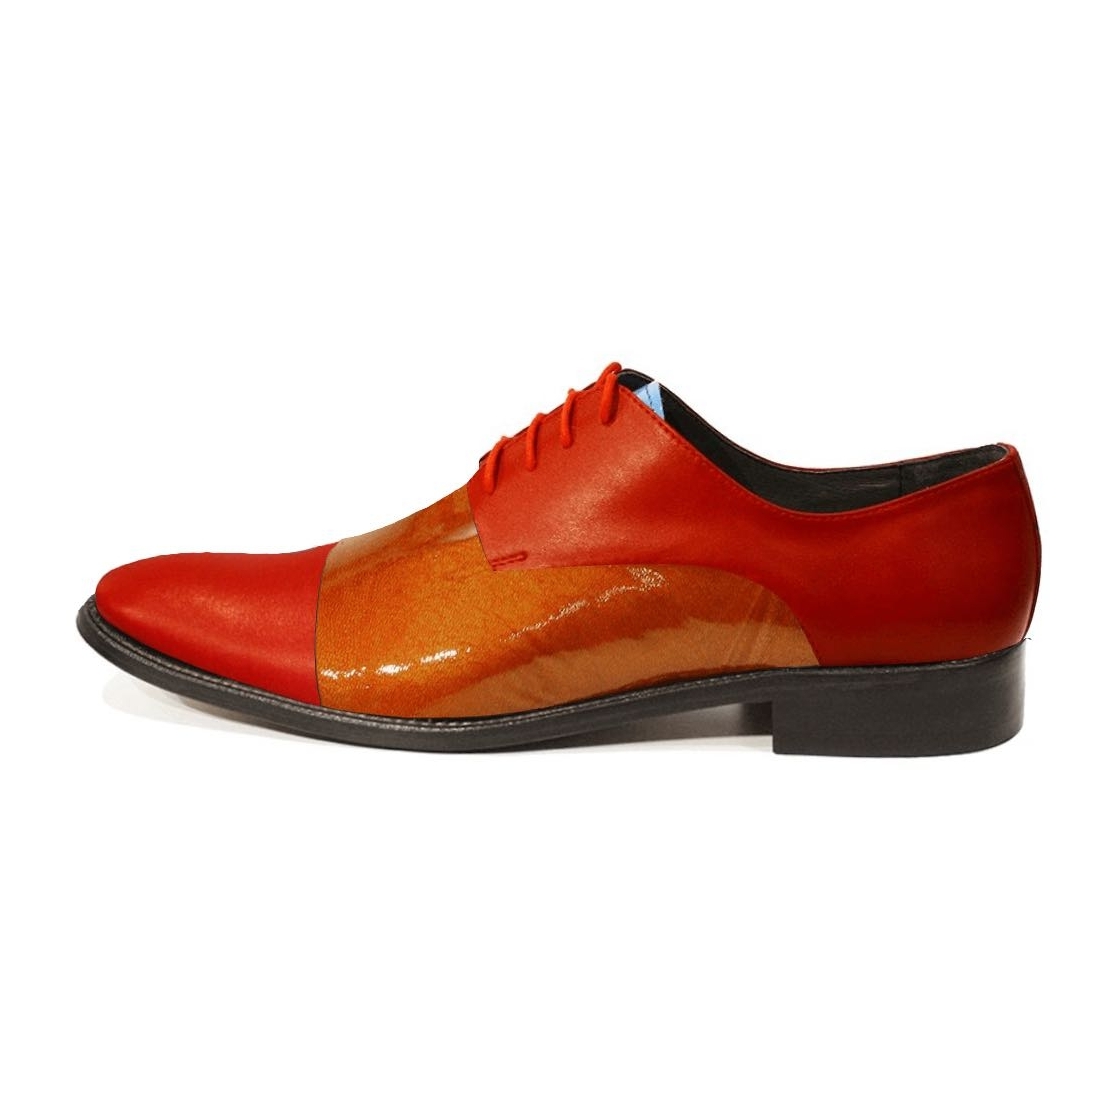 Modello Teterro - Schnürer - Handmade Colorful Italian Leather Shoes